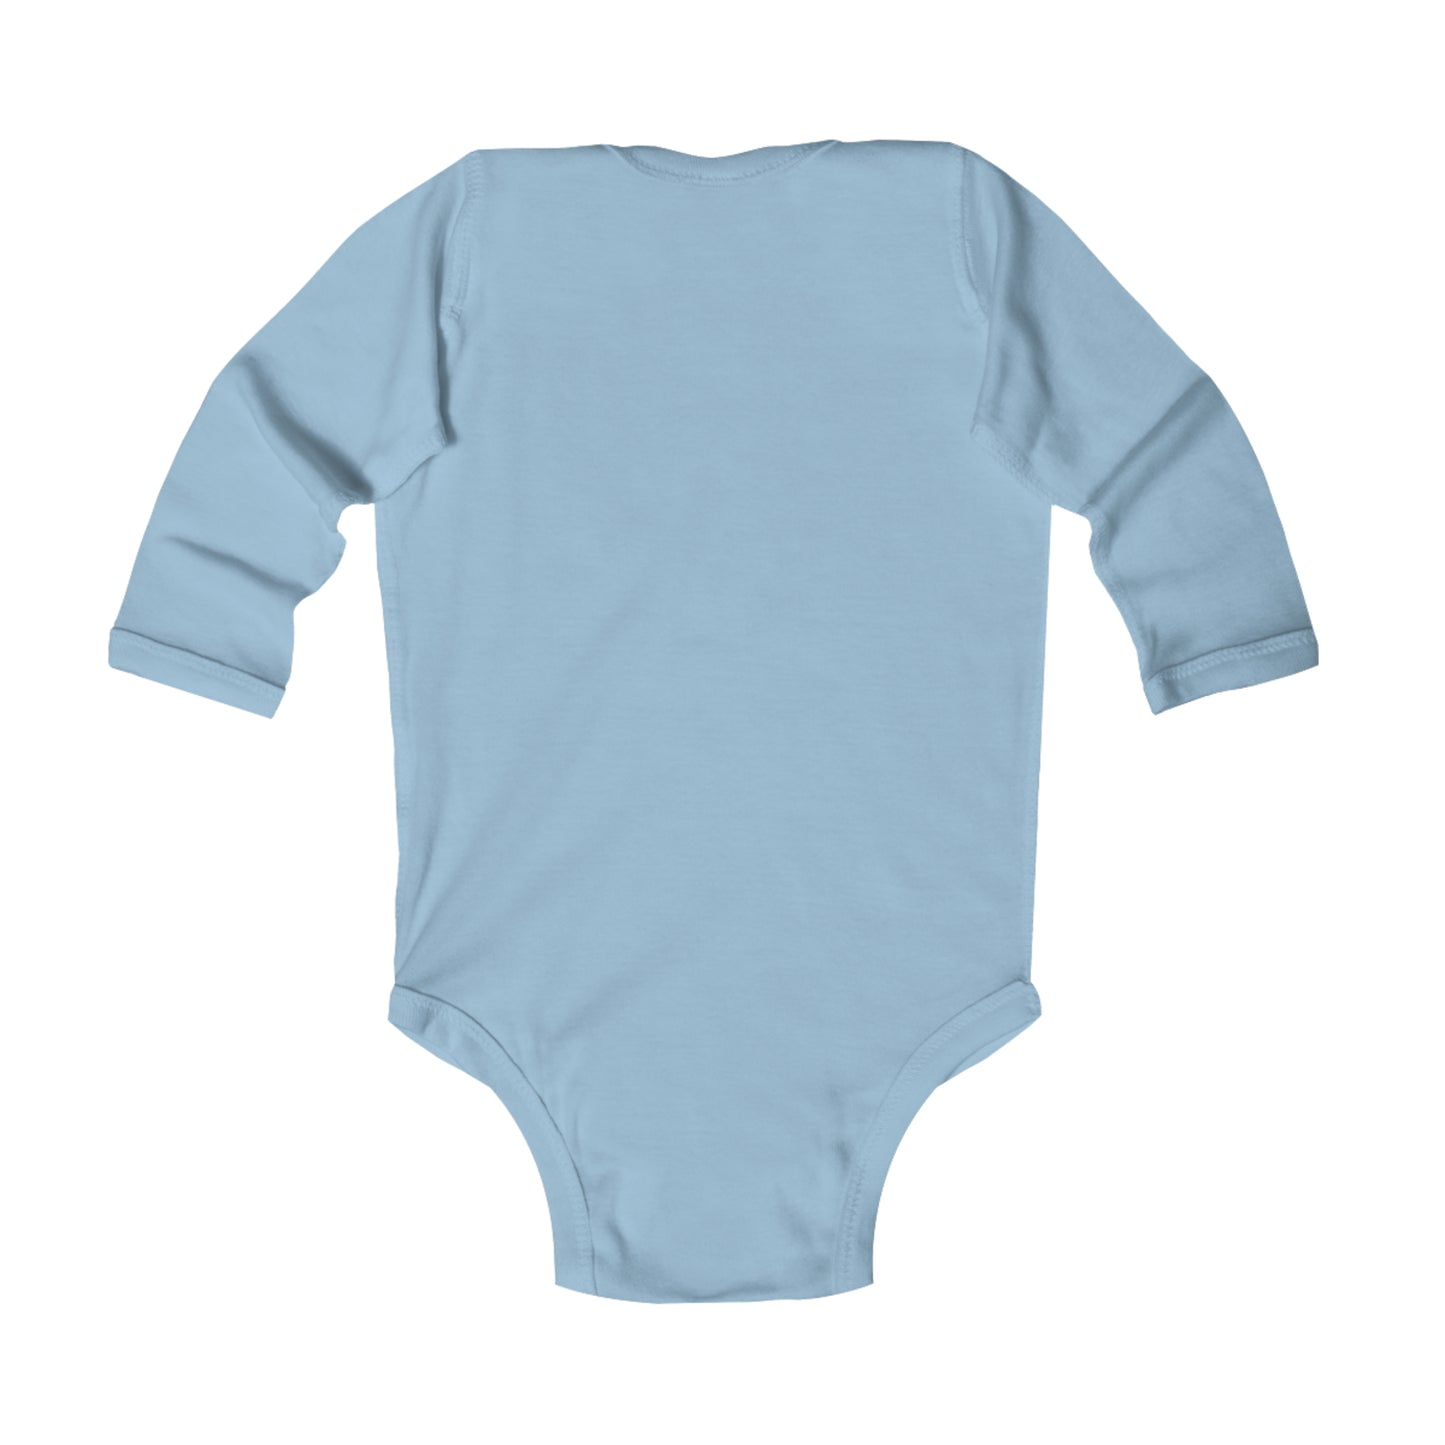 Infant Long Sleeve Bodysuit, "Believe in the magic"